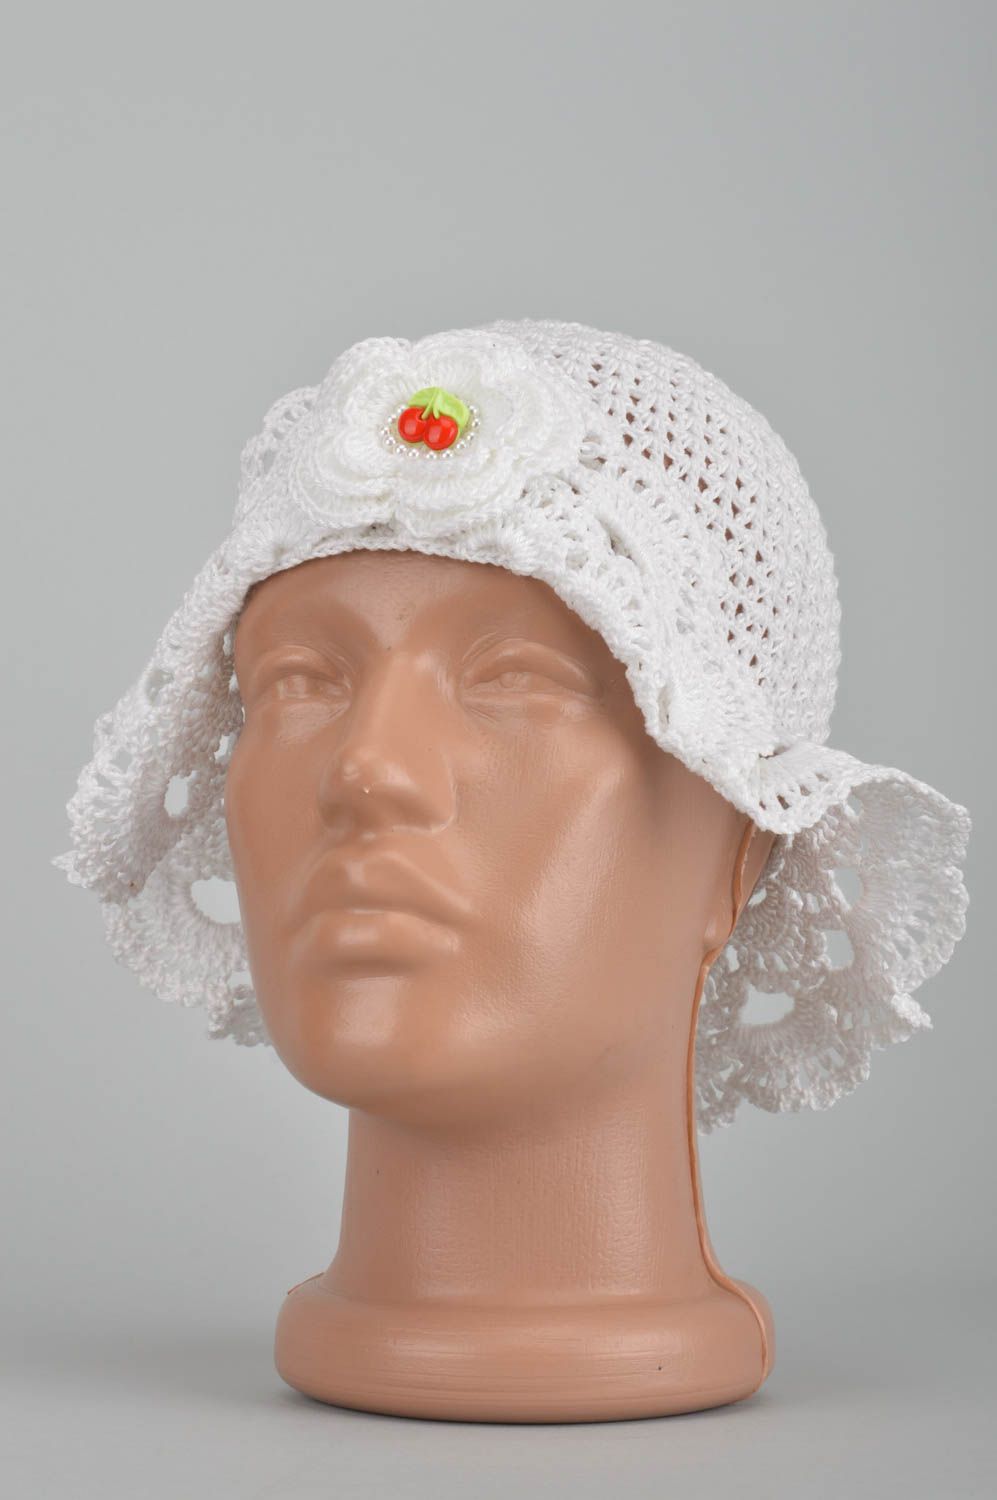 Stylish handmade crochet hat crochet ideas designer accessories for girls photo 1